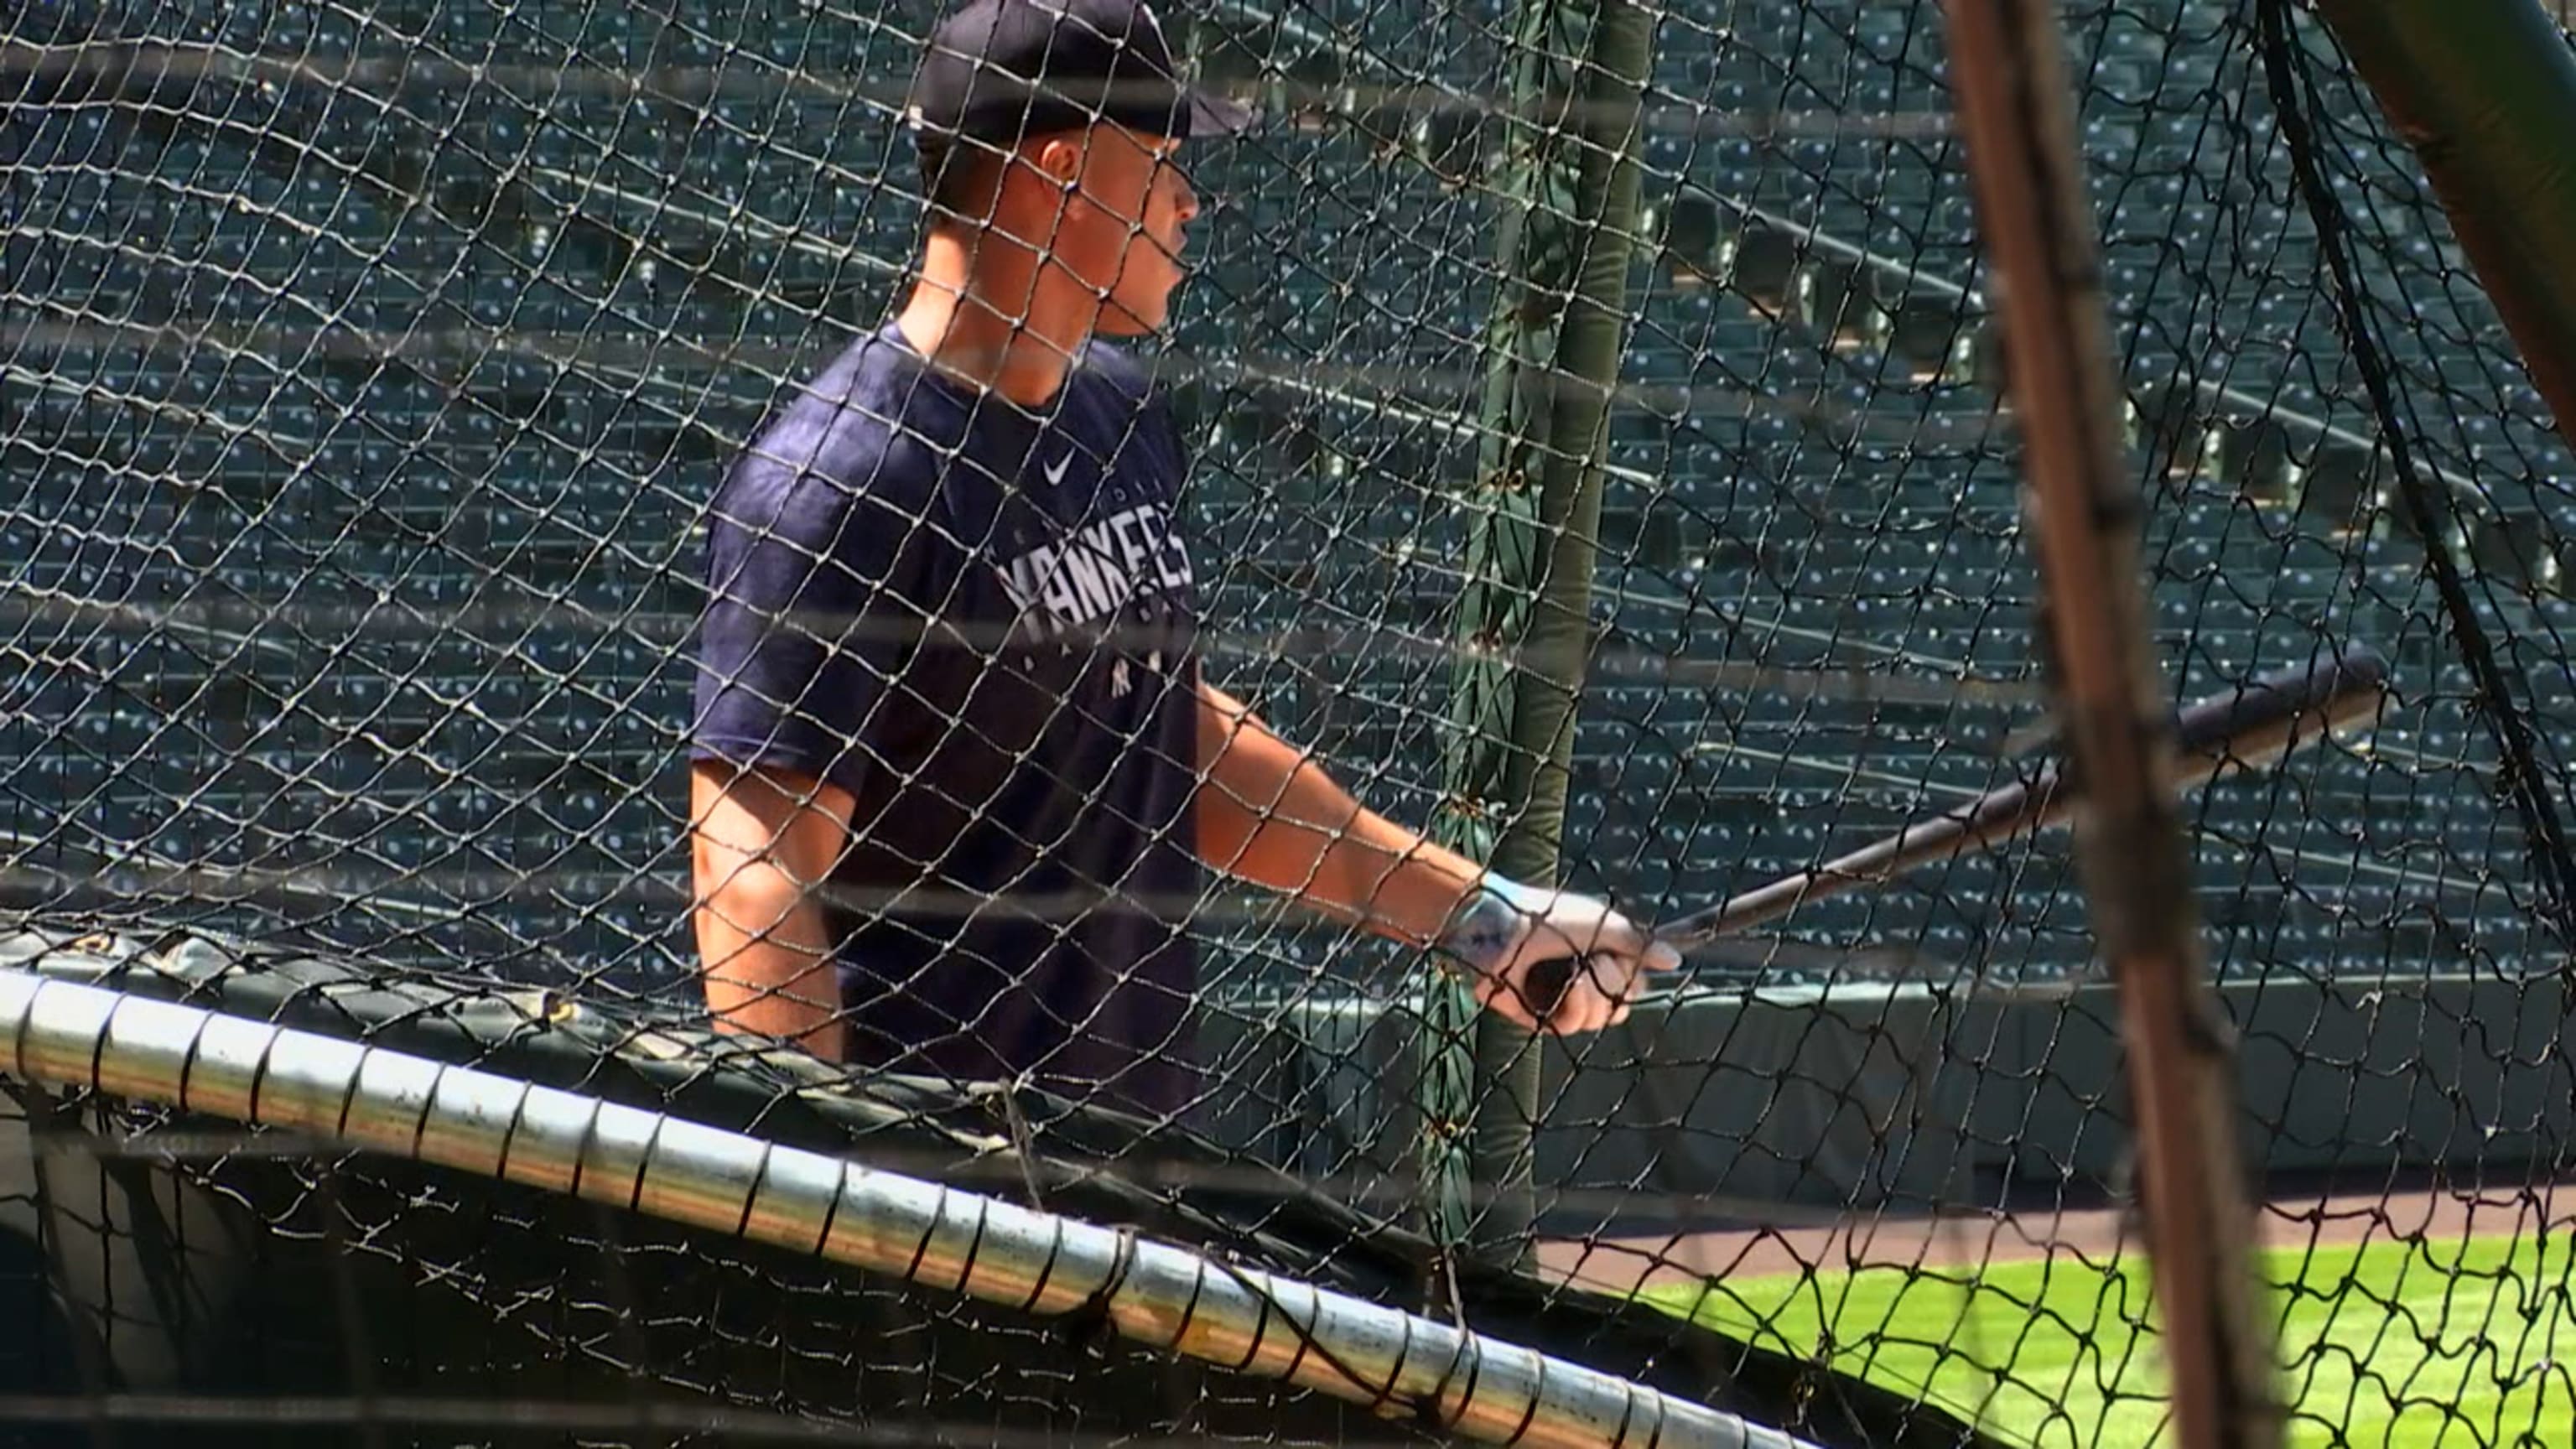 Aaron Judge takes batting practice at Yankee Stadium